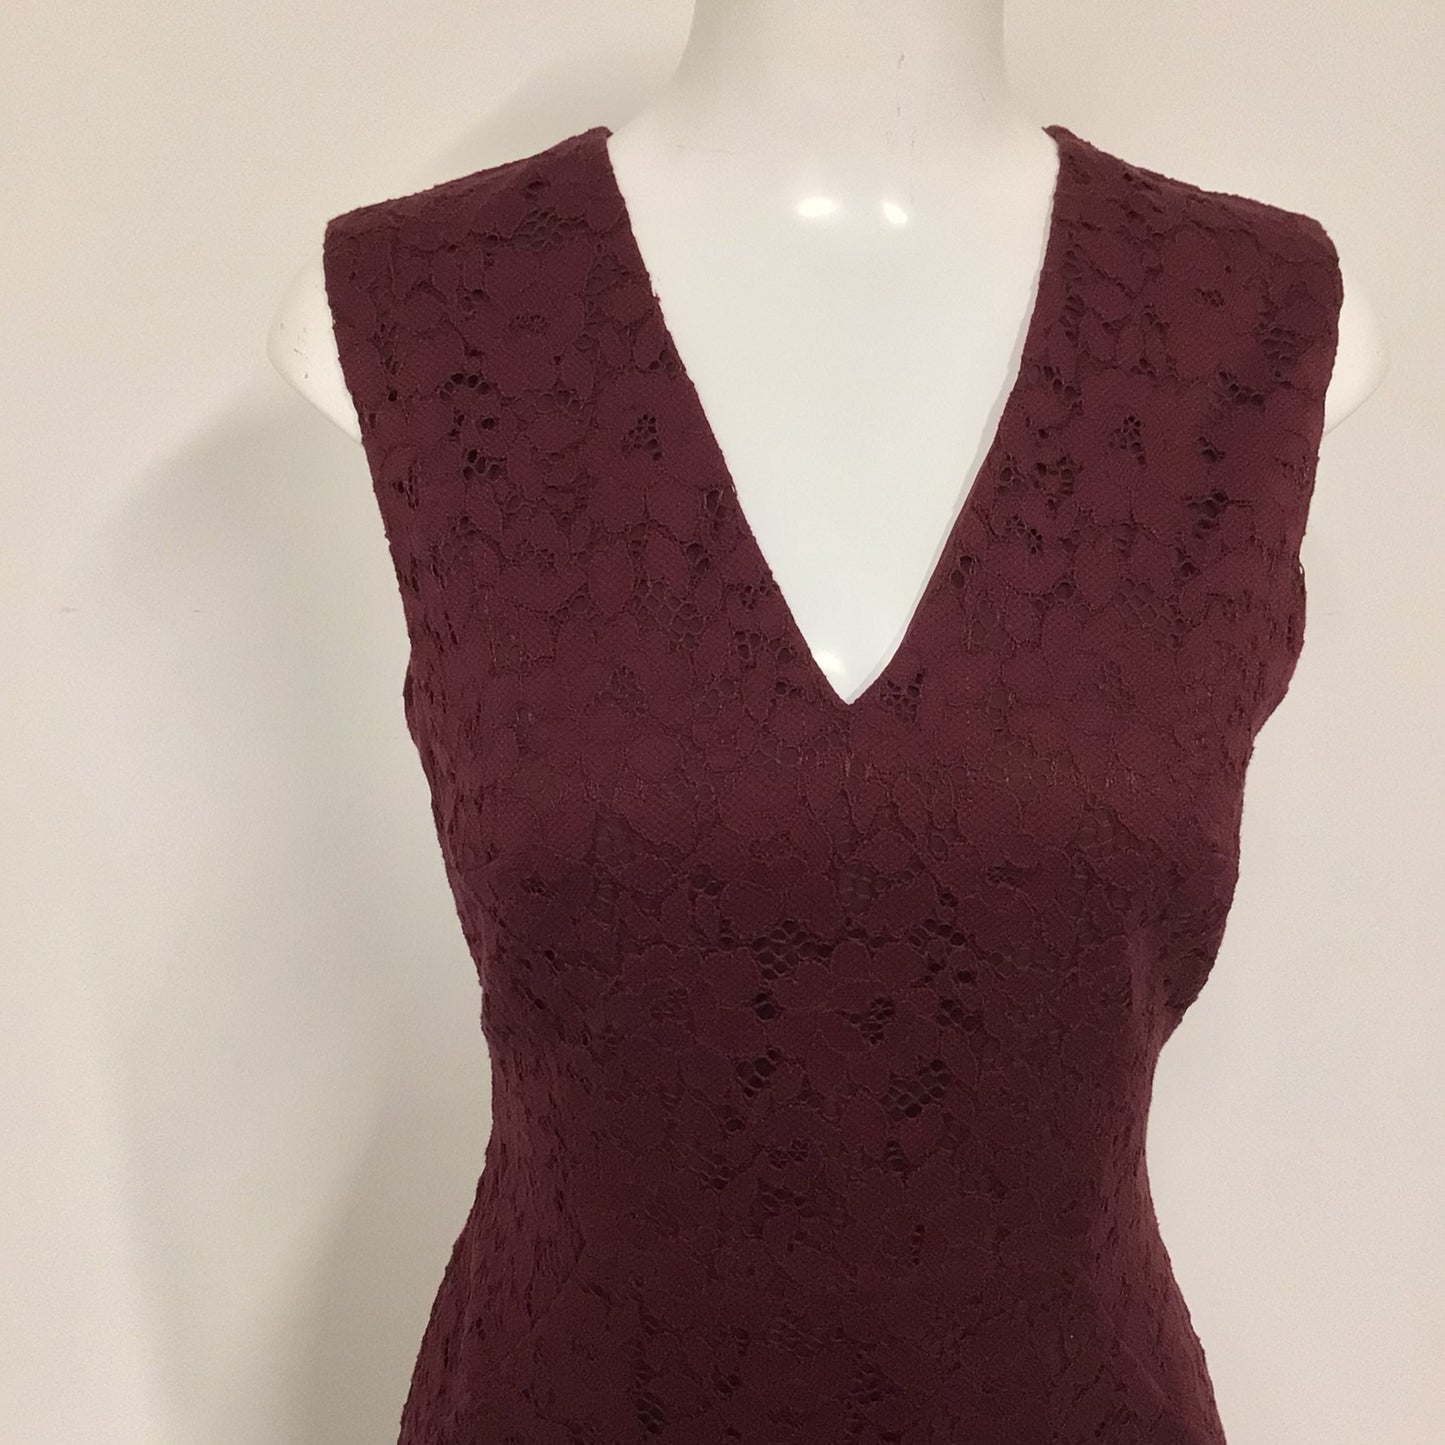 Jigsaw Maroon V-Neck Dress w/Lace Details Size 10